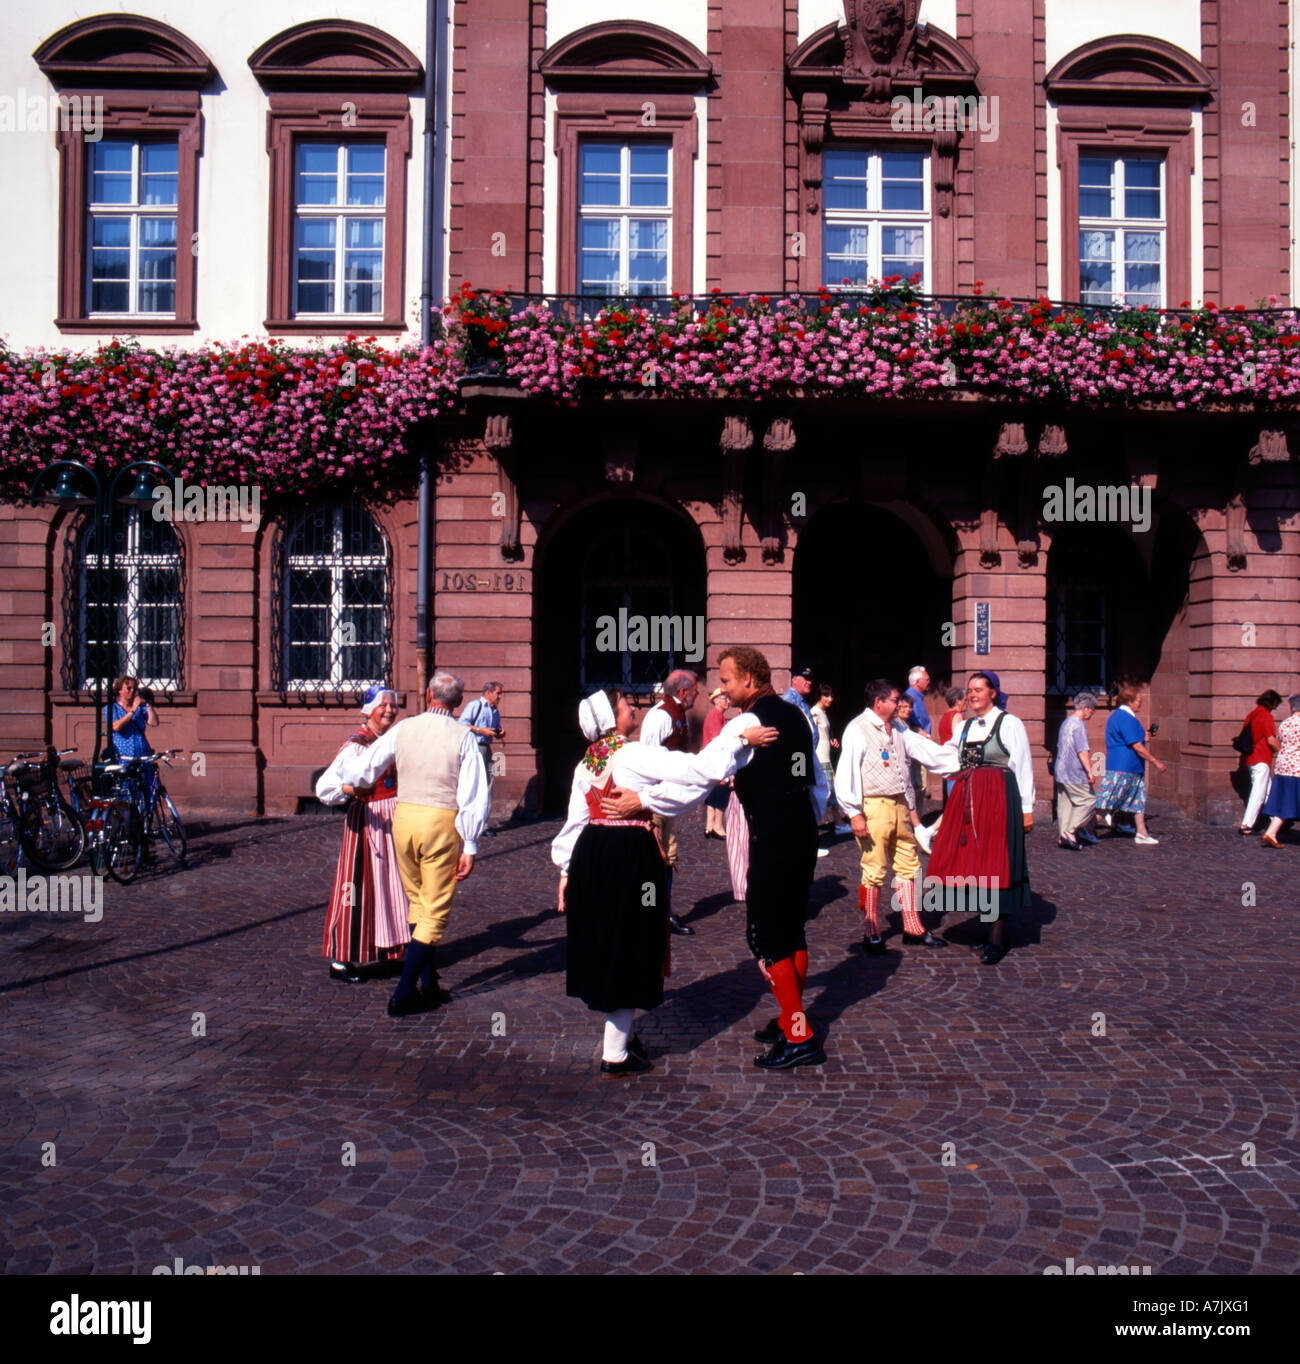 Folk dancing on a street in the German city of Heidelberg. Stock Photo